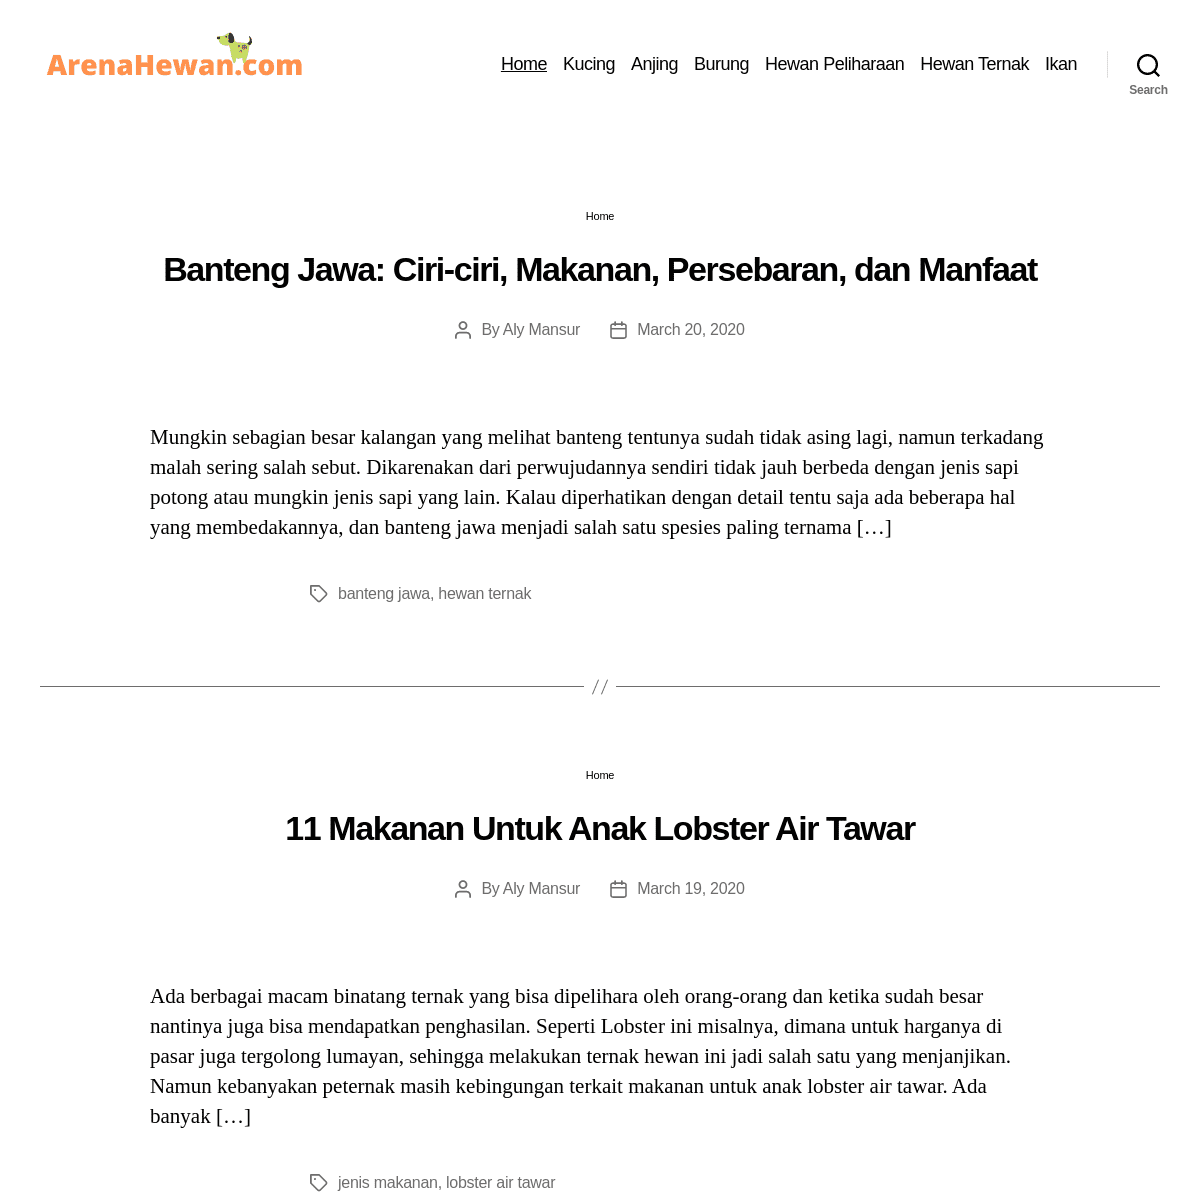 A complete backup of arenahewan.com